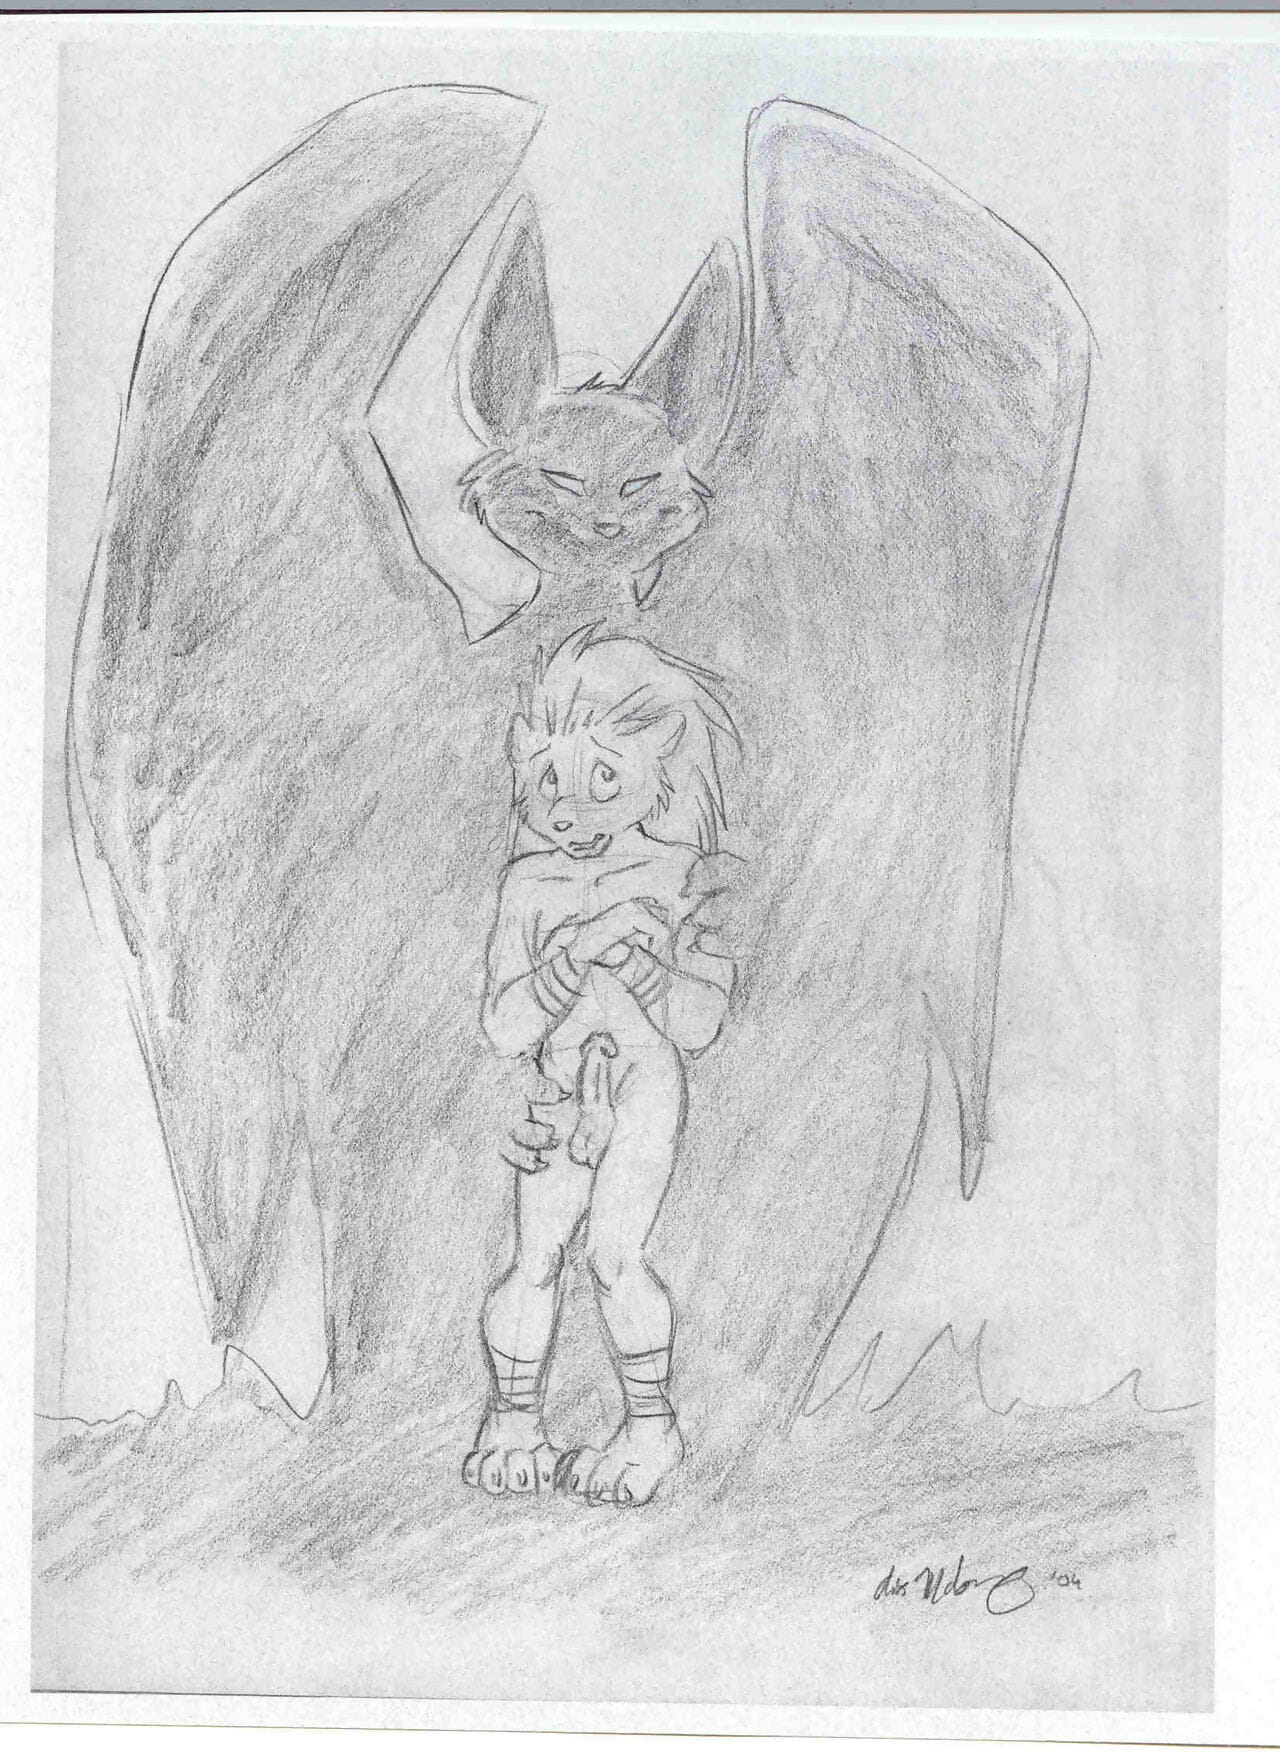 Demon Hunter page 1